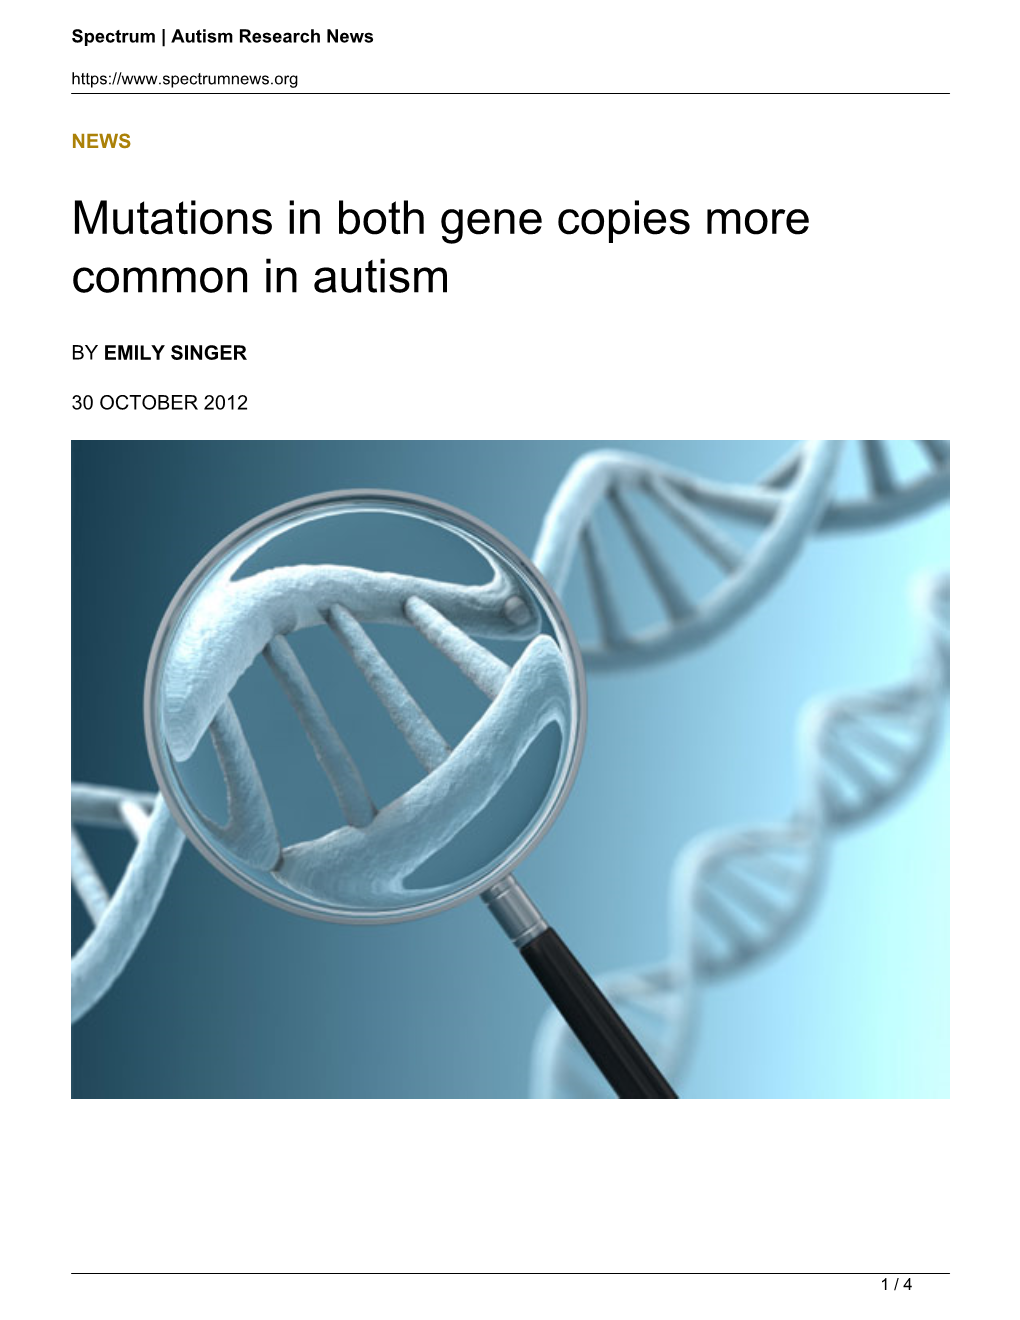 Mutations in Both Gene Copies More Common in Autism